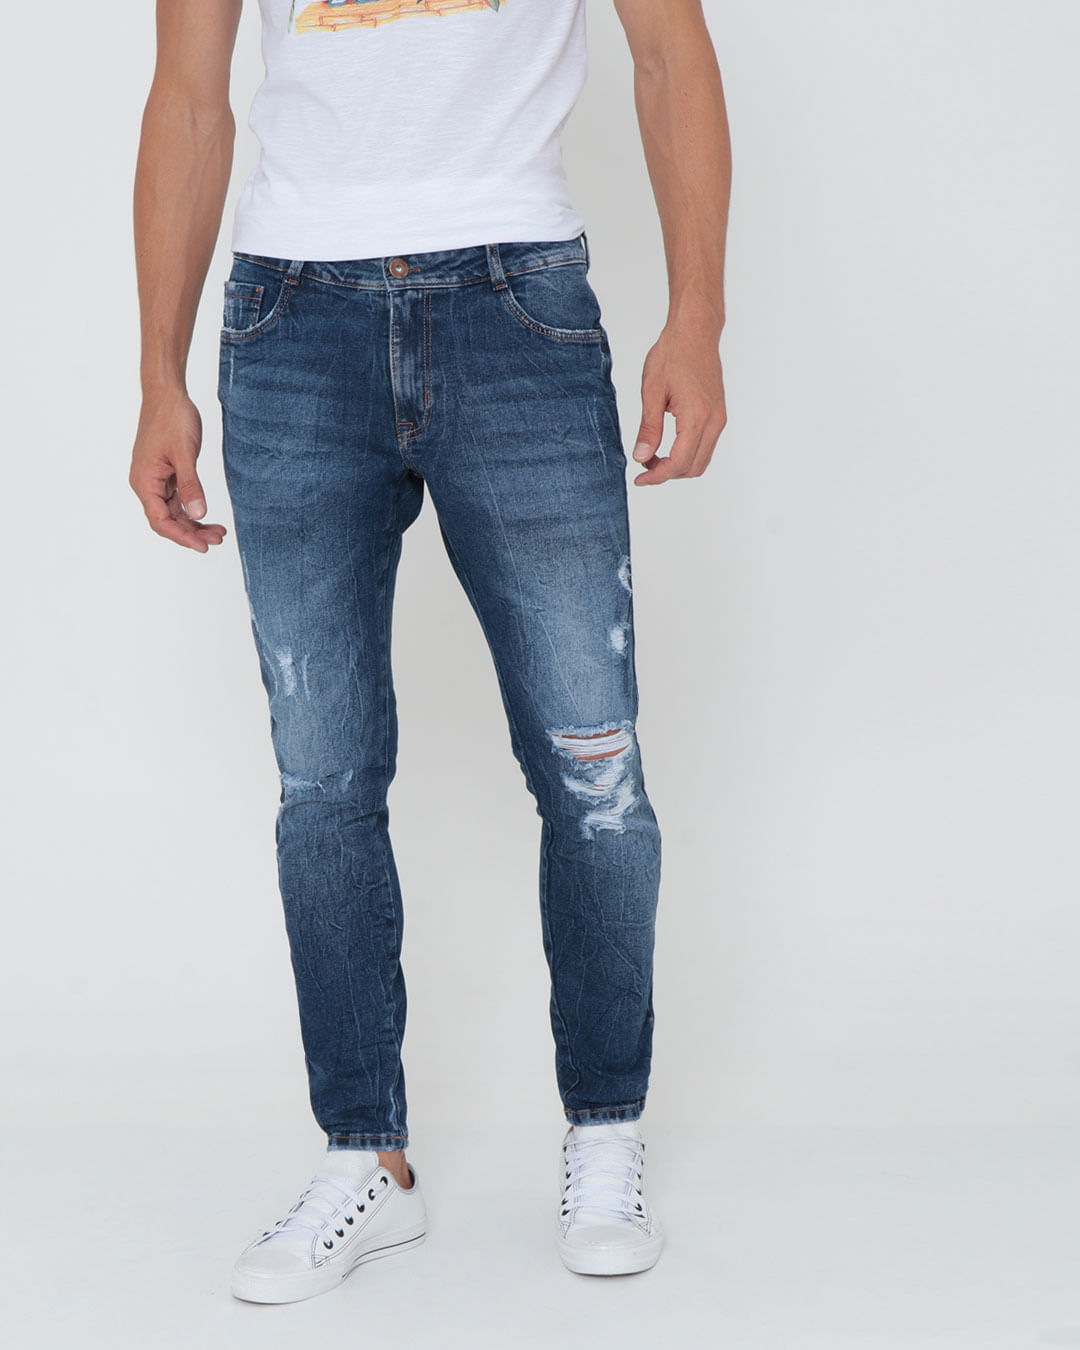 Calca-33037-Jeans-Skn-Rasgos-Jv---Blue-Jeans-Medio